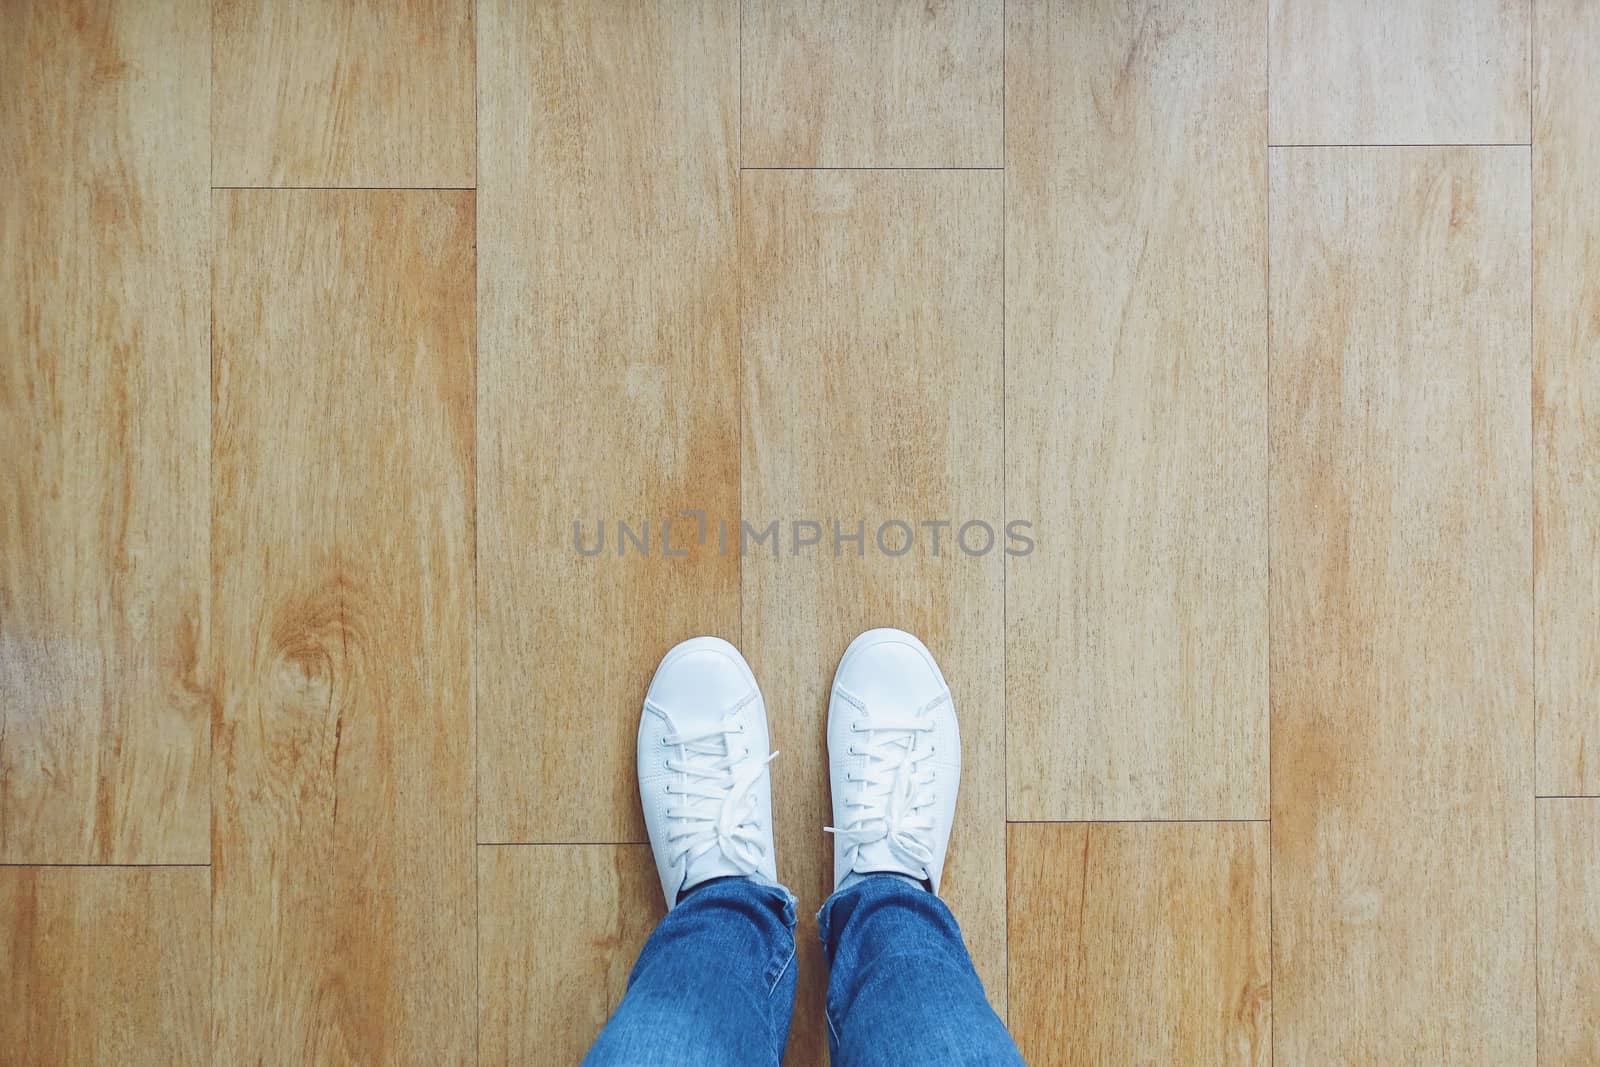 Selfie of feet in fashion sneakers on wooden floor background, t by nuchylee